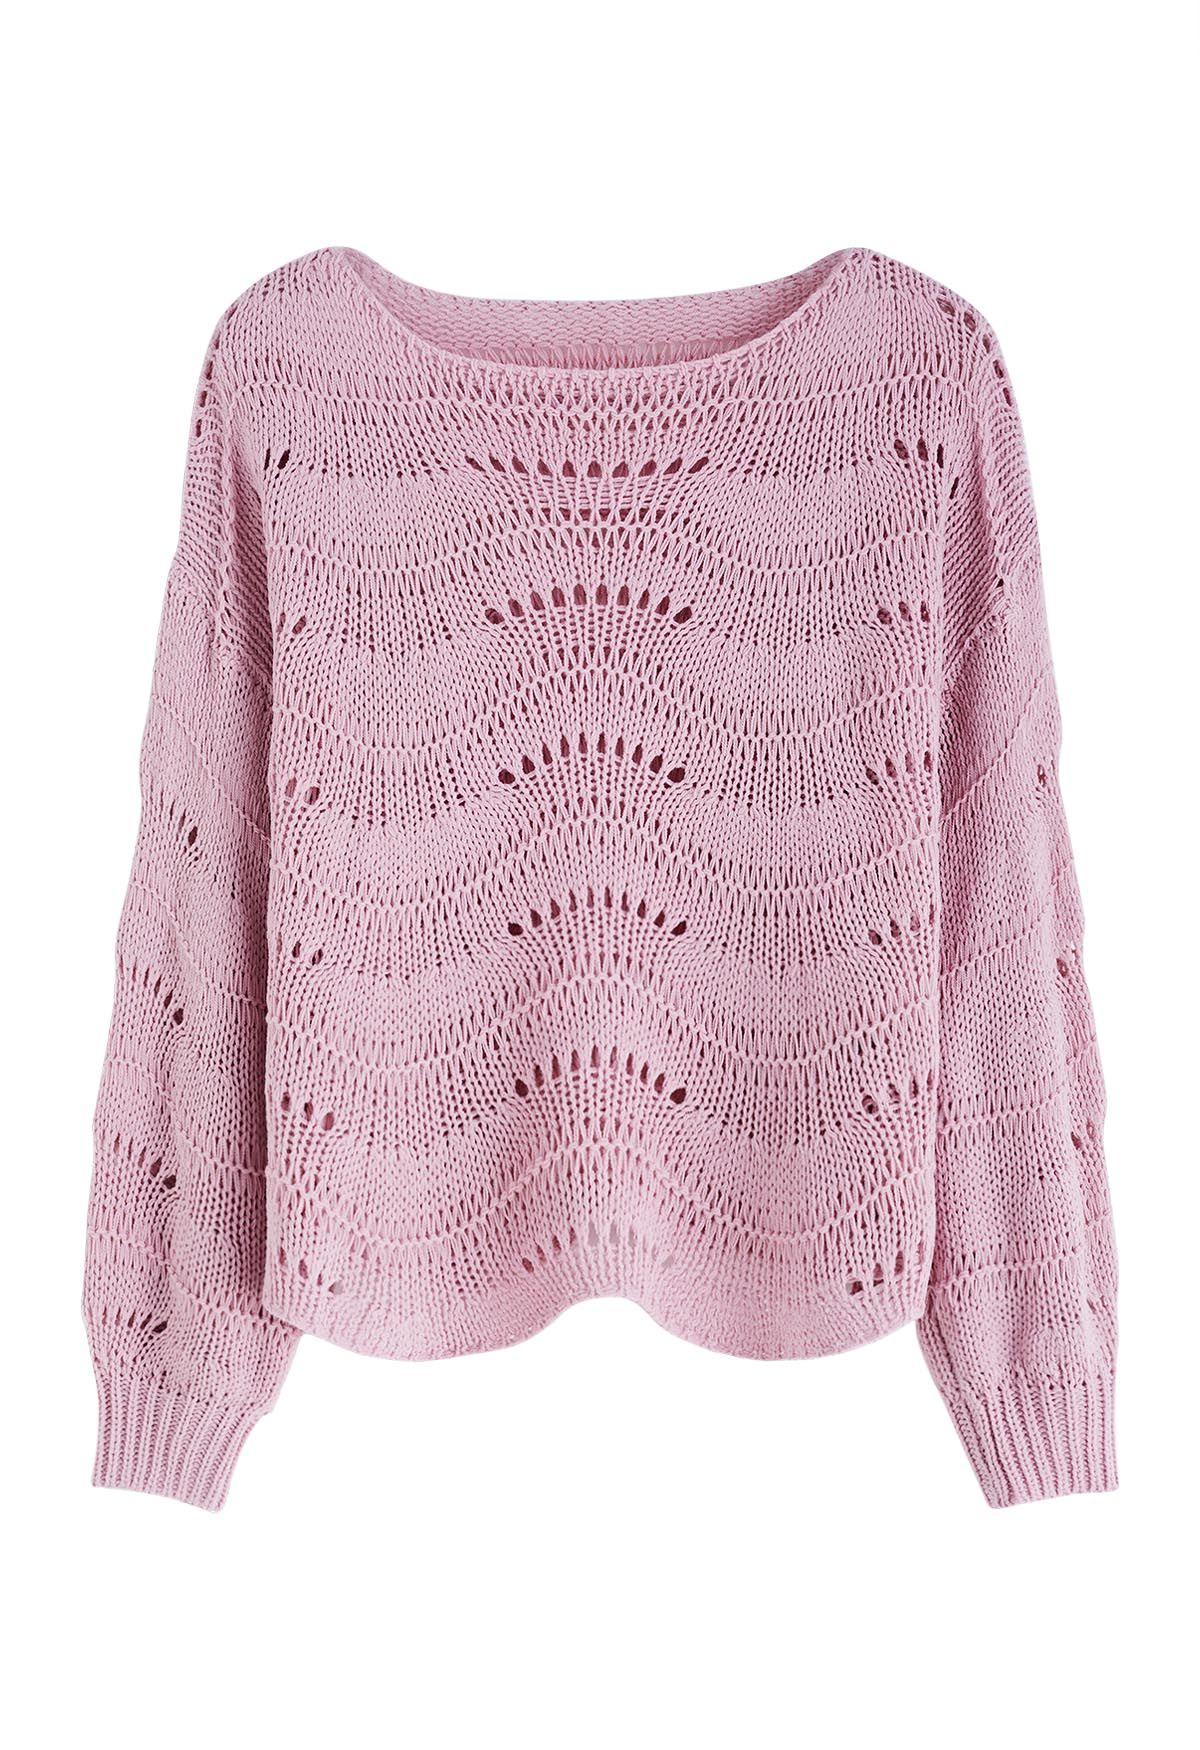 Wavy Line Openwork Knit Sweater in Pink